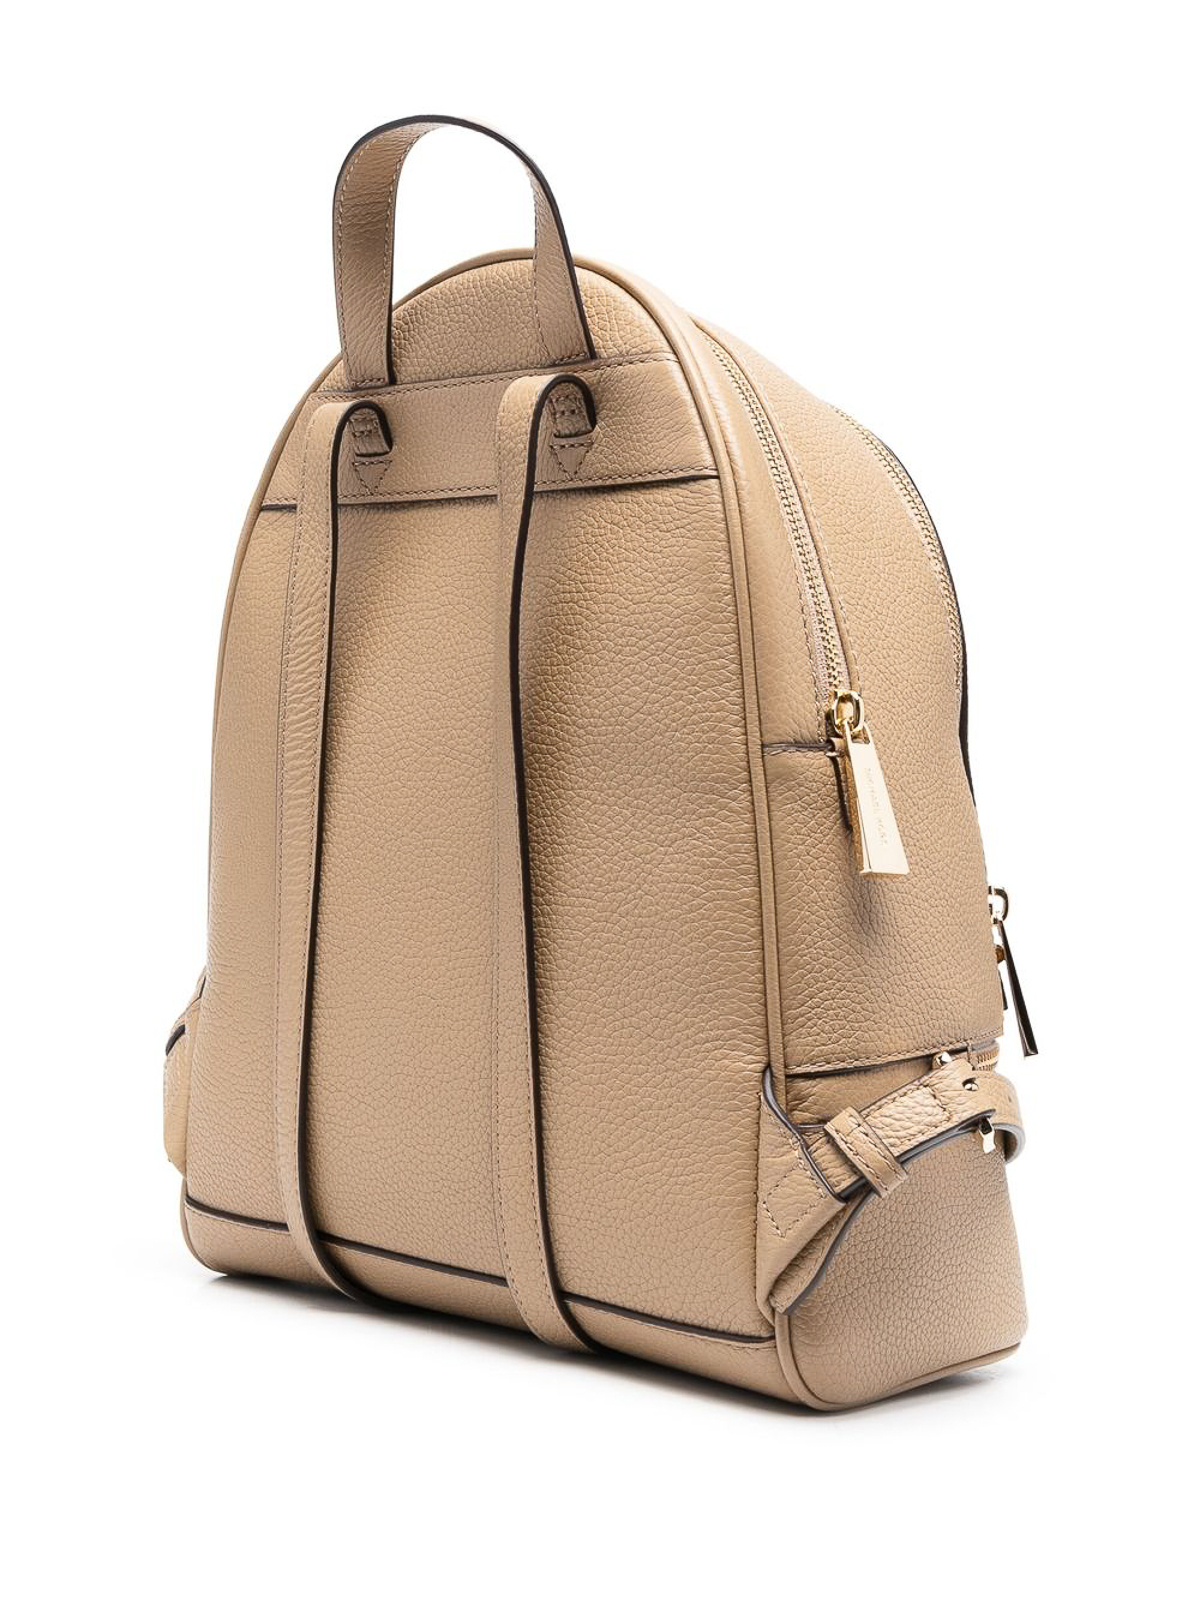 Michael Kors Rhea Medium Quilted Leather Backpack Purse MK Gold Logo Bag |  eBay